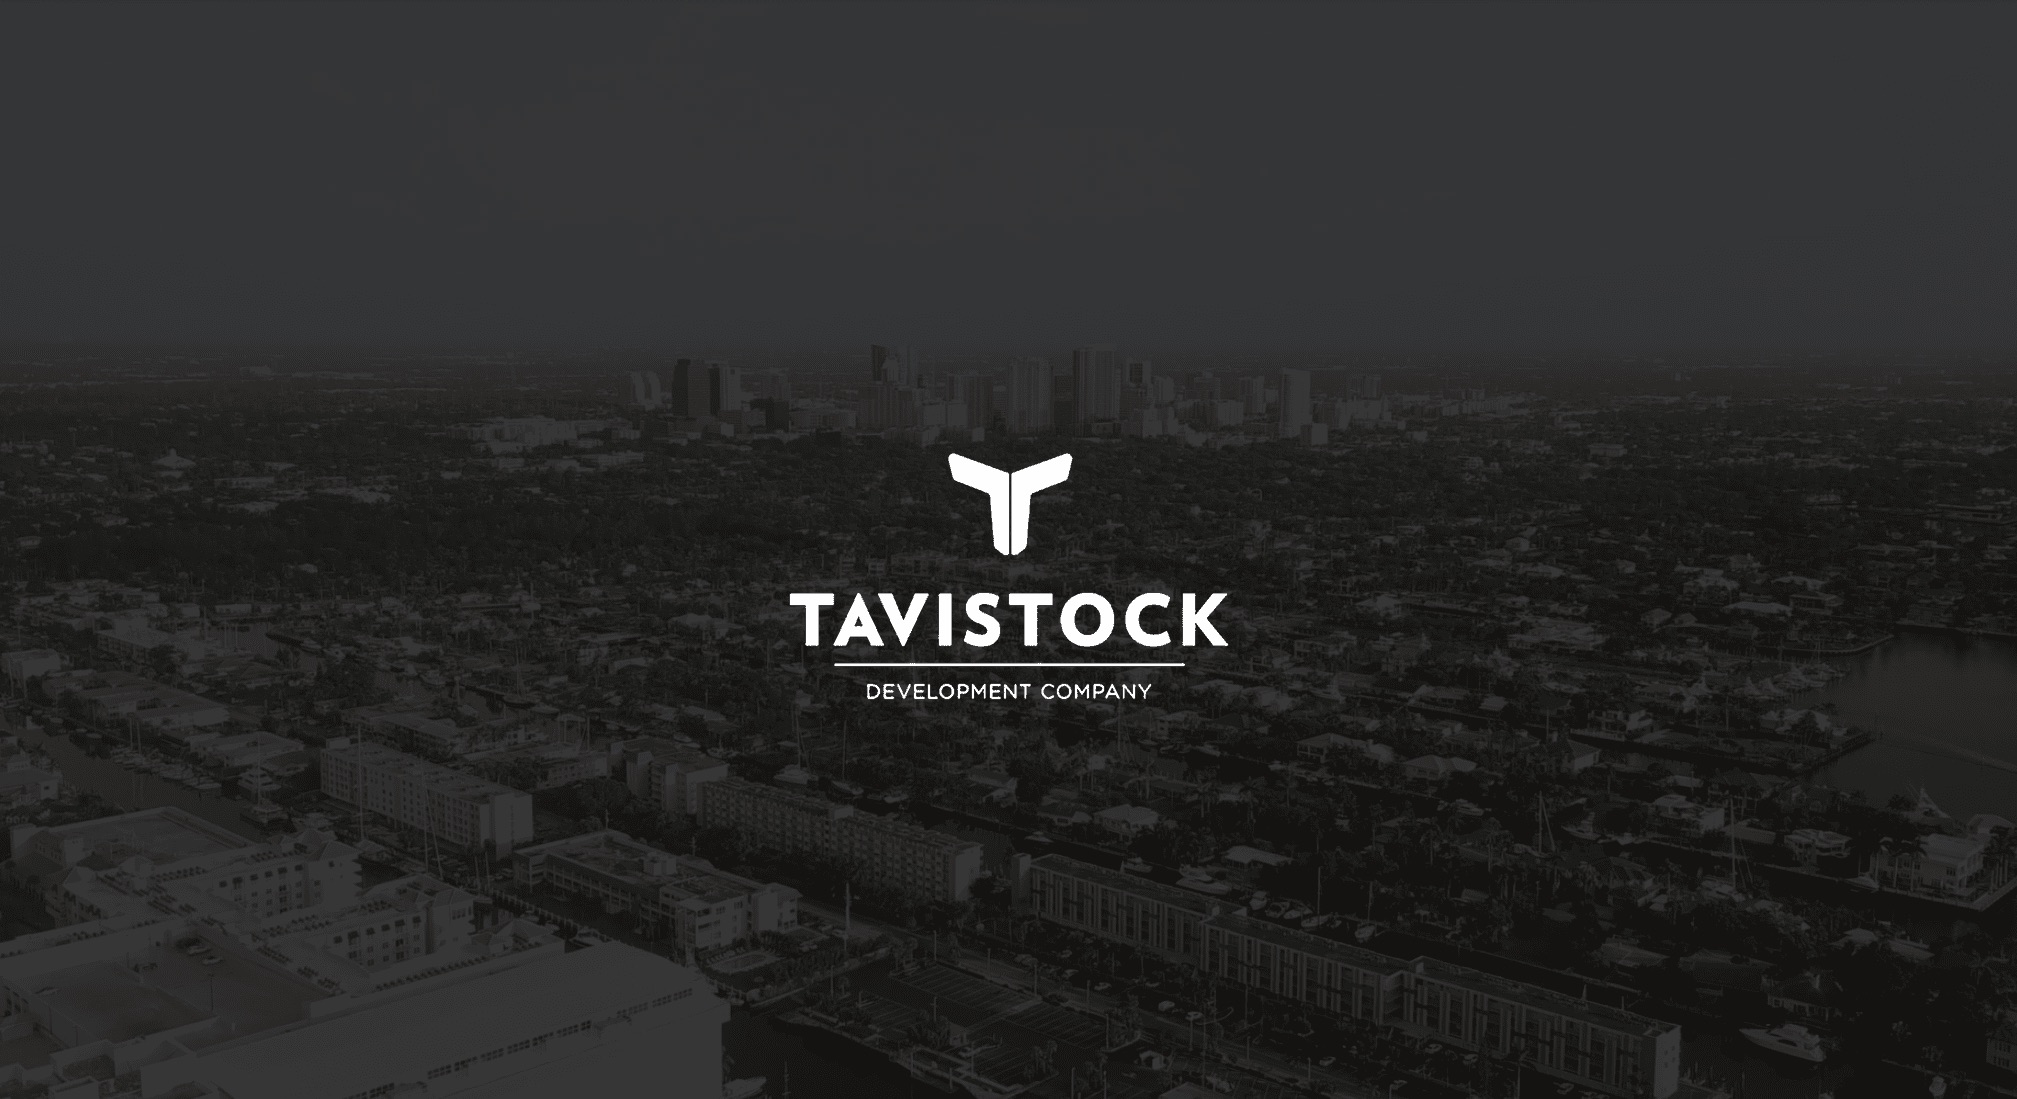 IU C&I Studios Page White Tavistock Development Company logo against a dimmed overhead view of the city